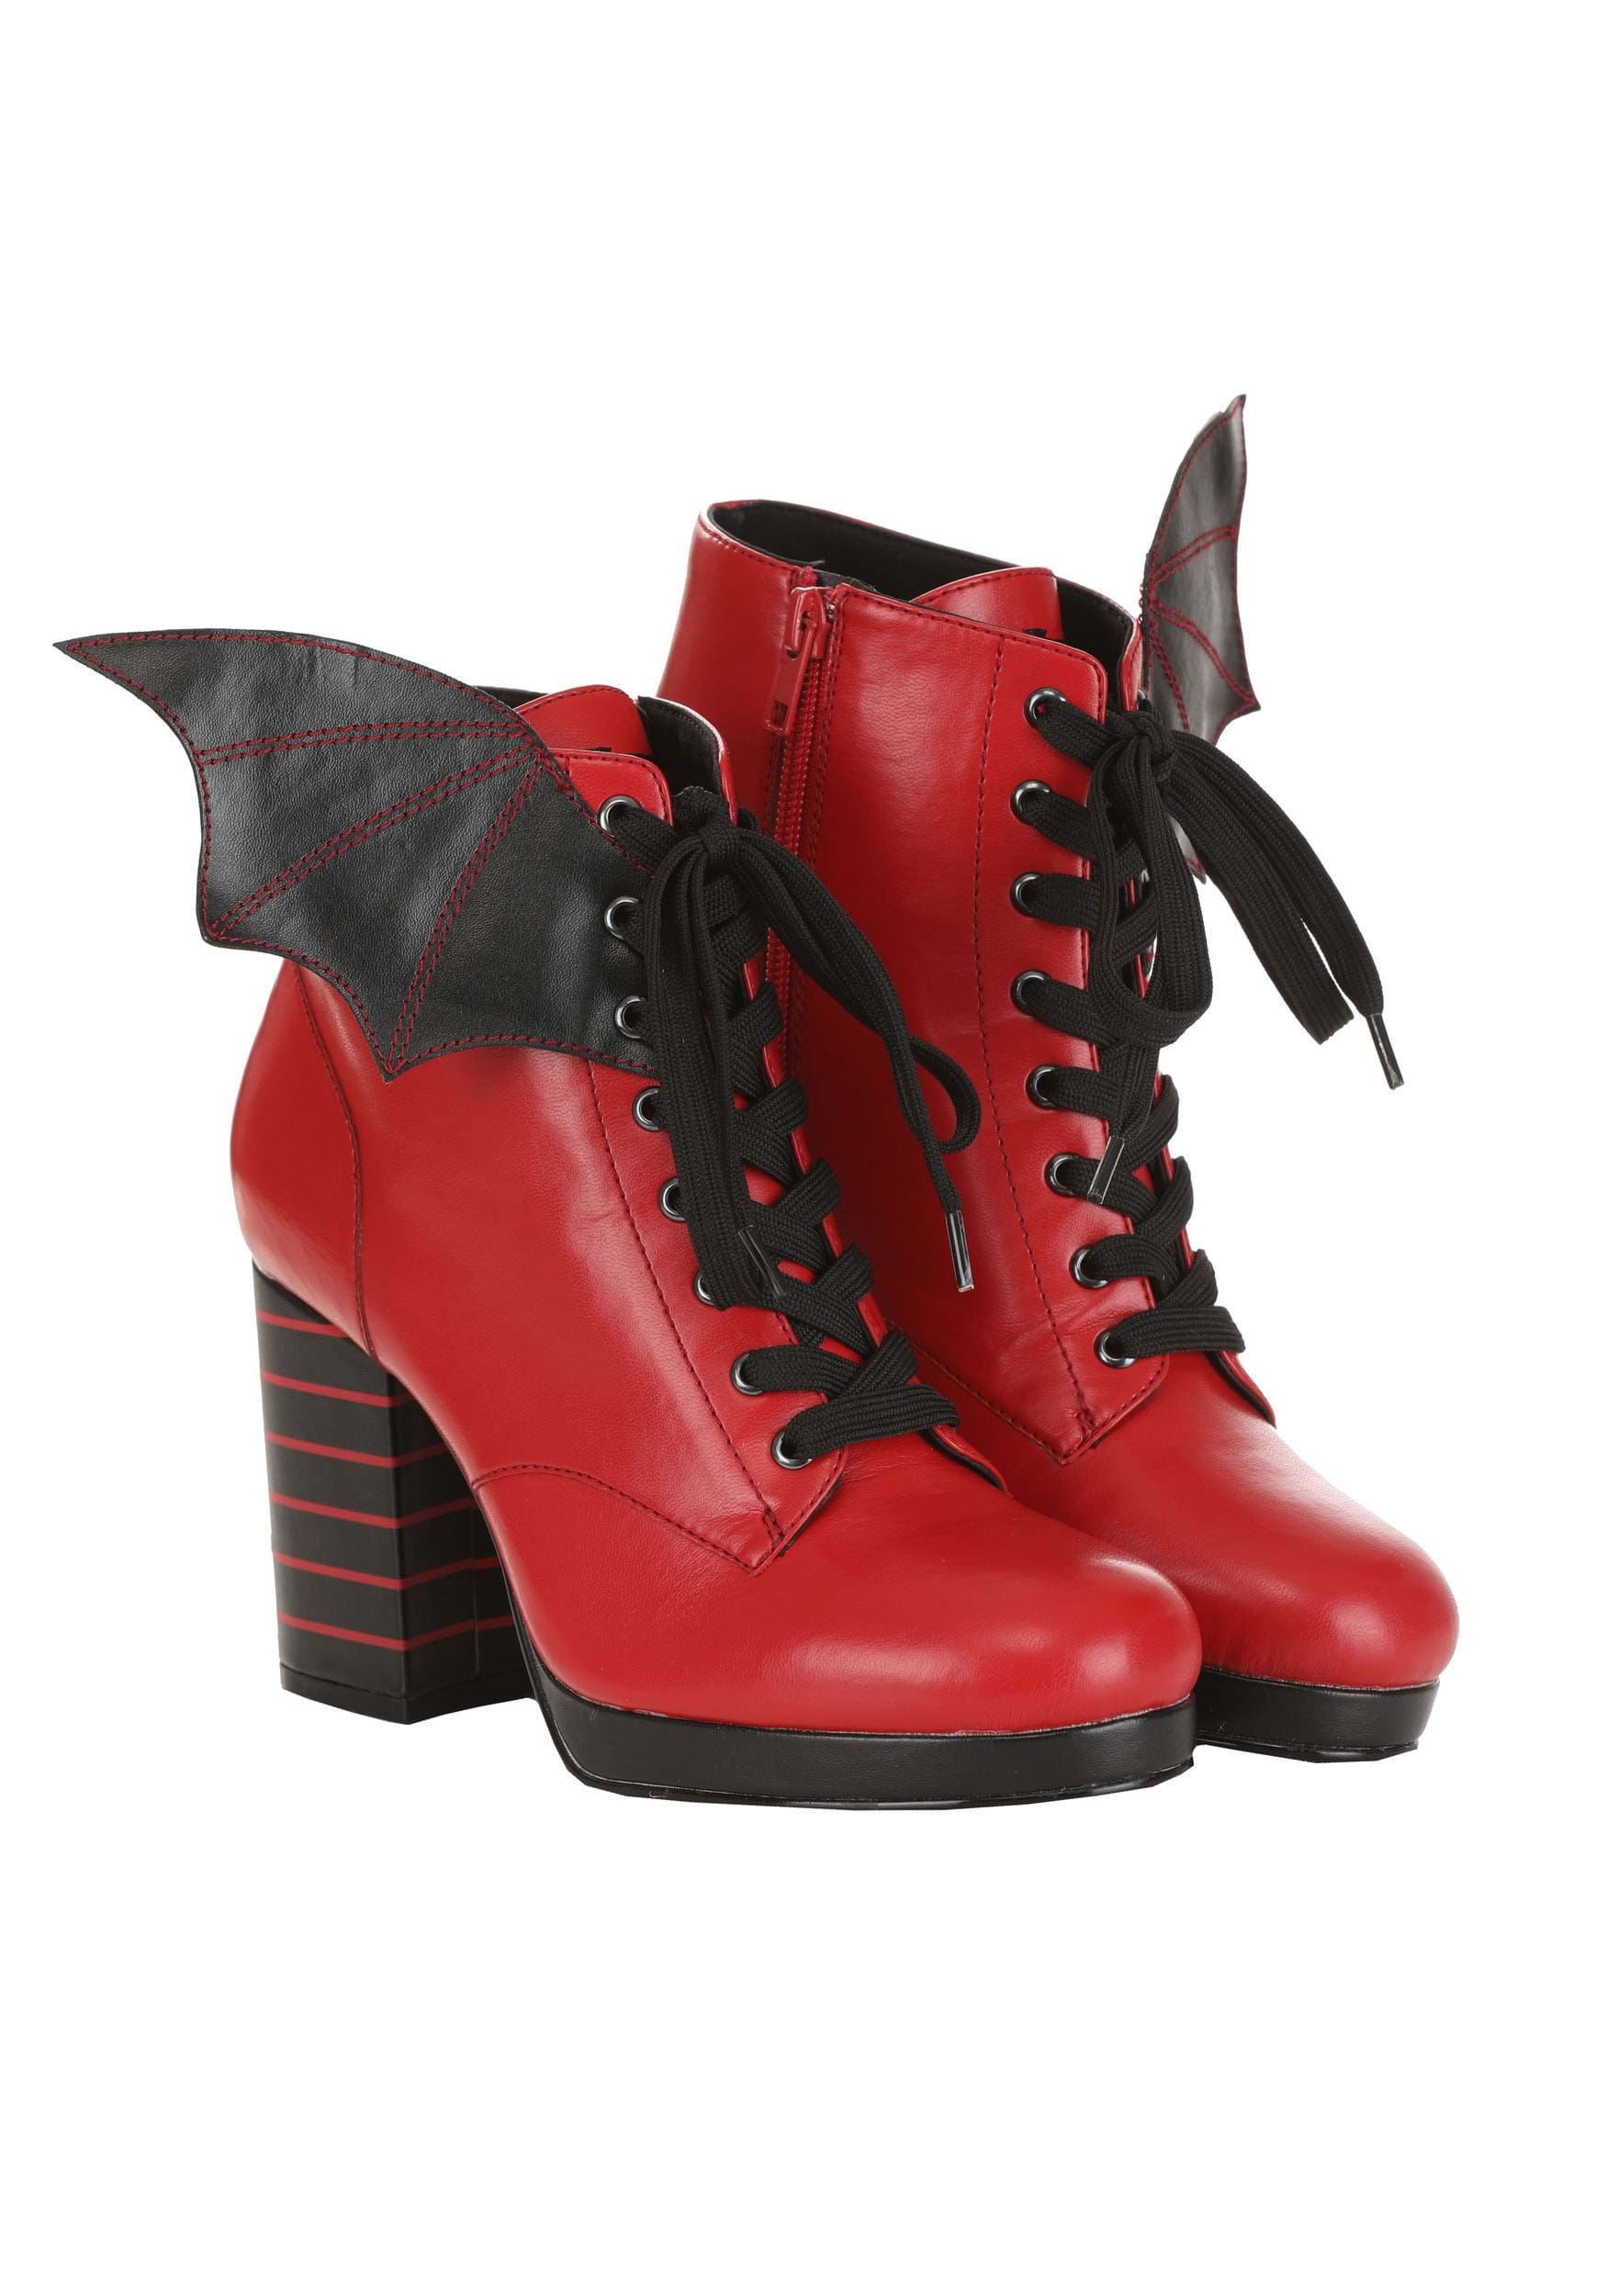 Image of Mavis Hotel Transylvania Heeled Boots for Women ID FUN4051AD-6